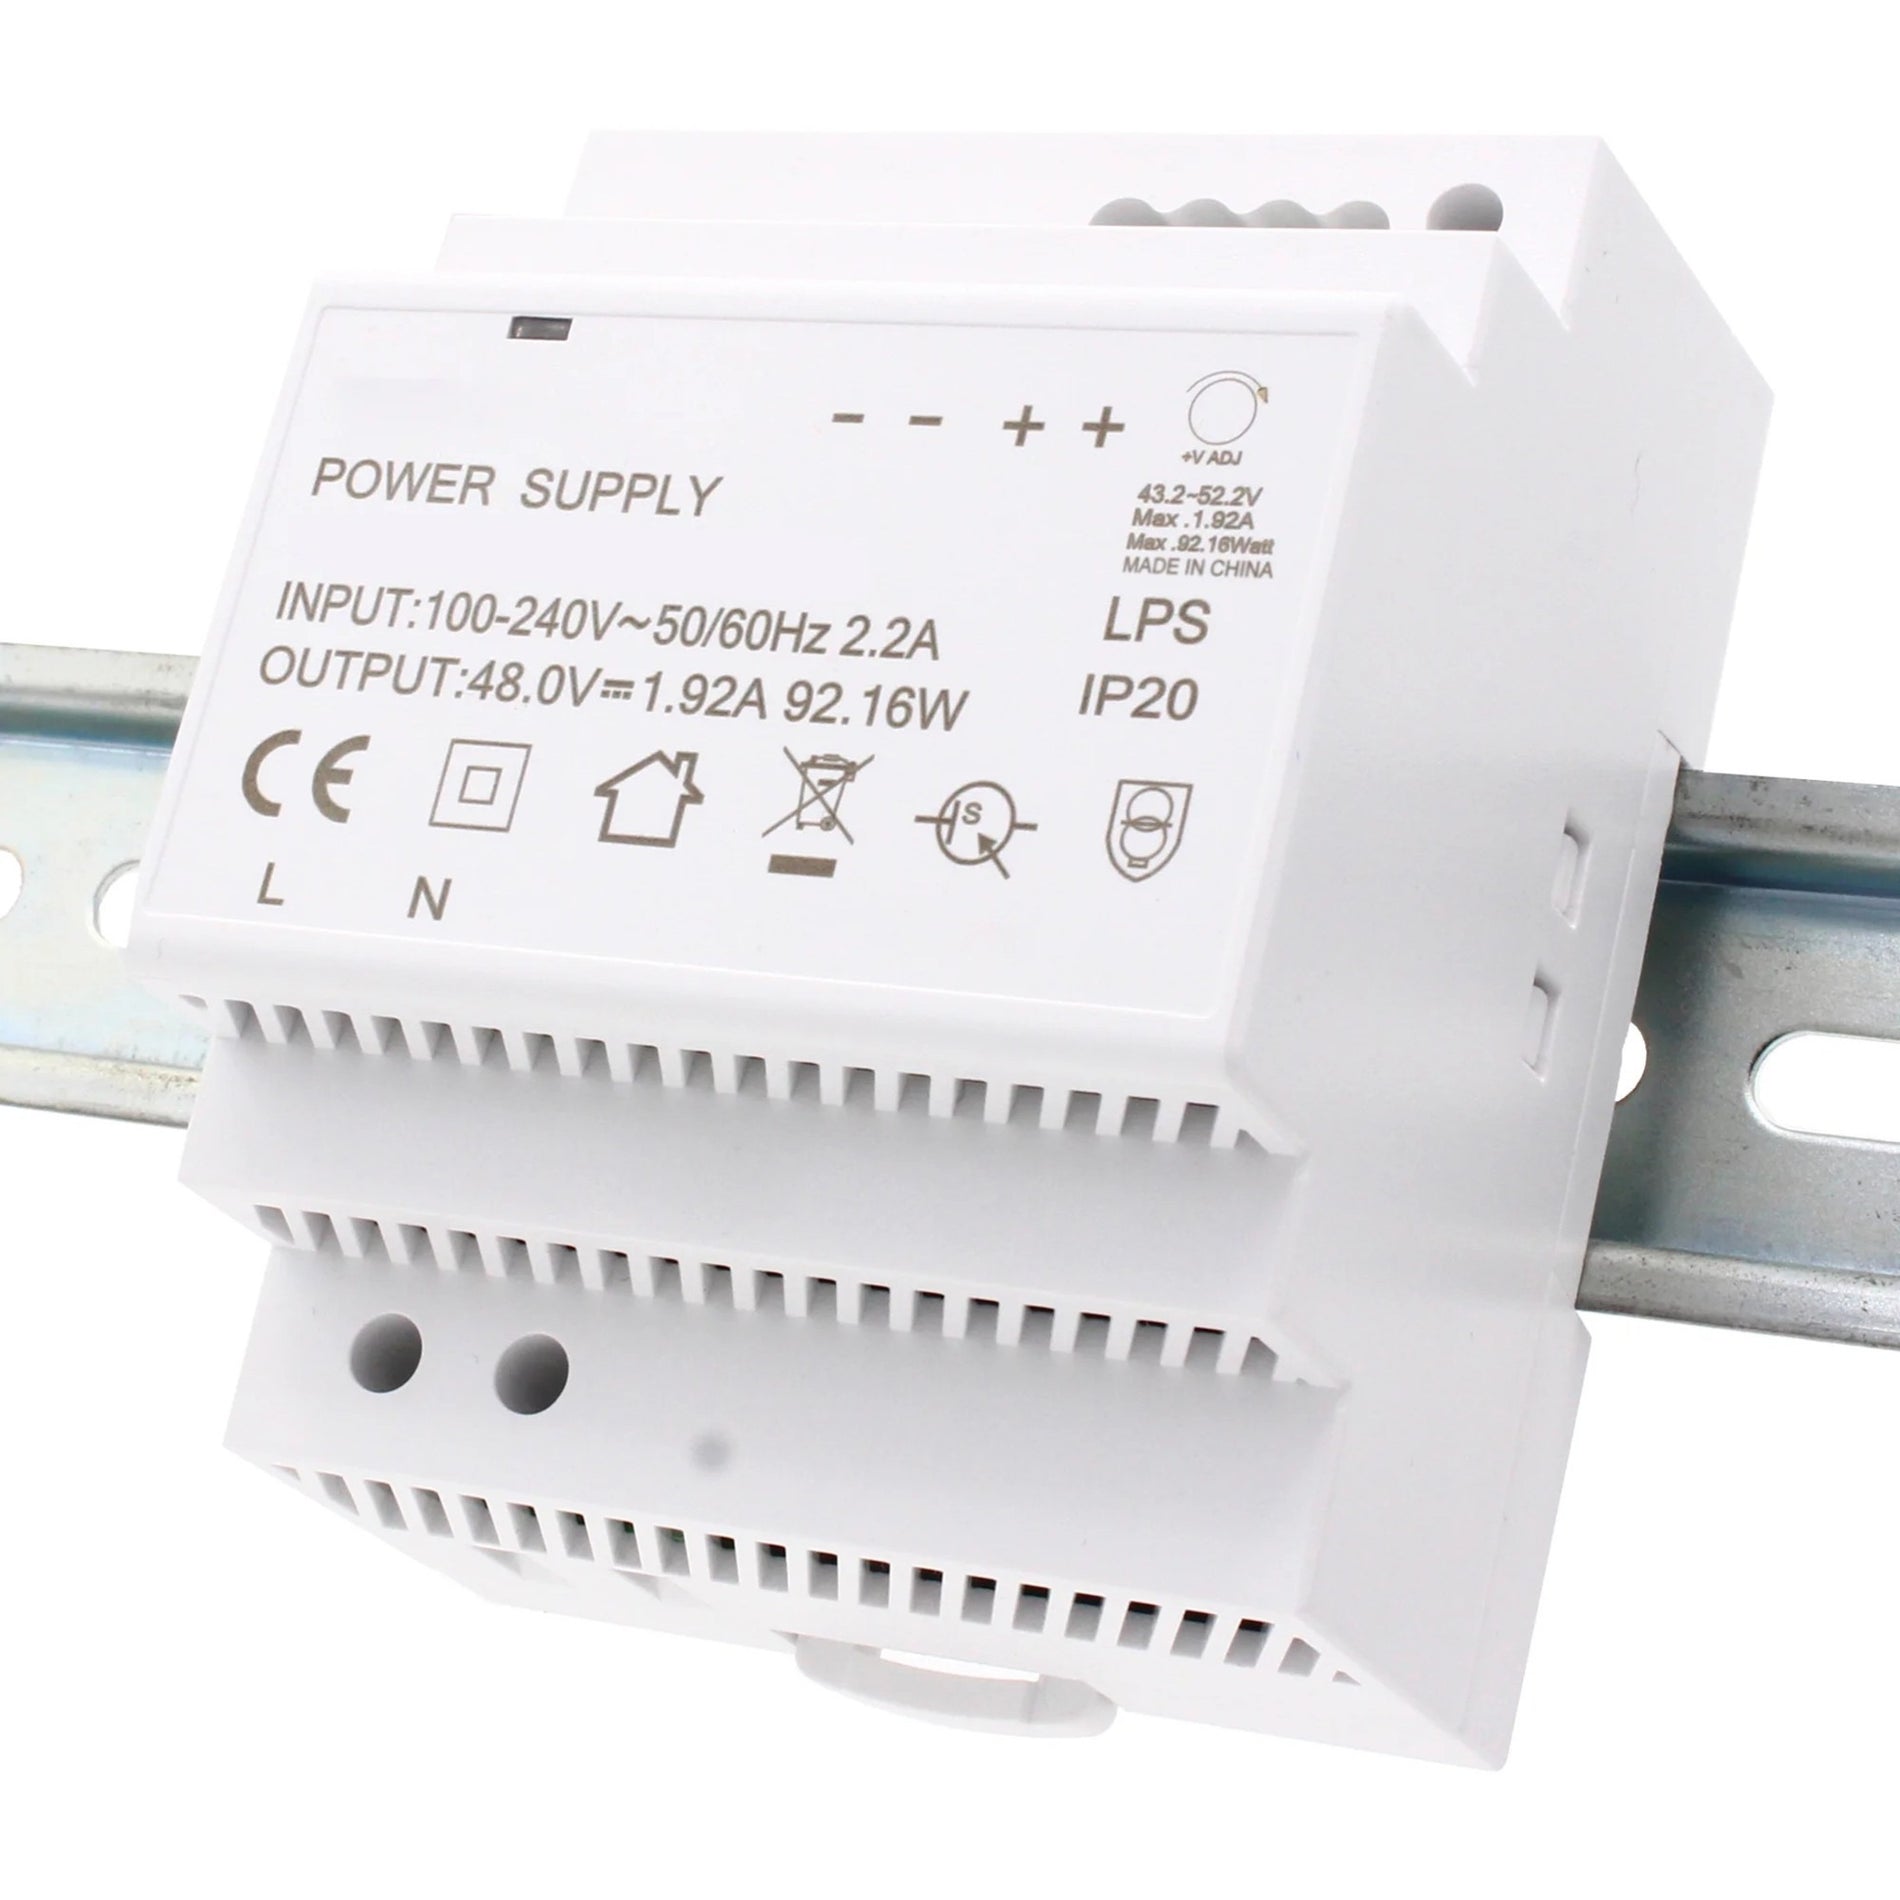 Brainboxes PW-301 96W Single Output Industrial DIN Power Supply, 48V, Lifetime Warranty